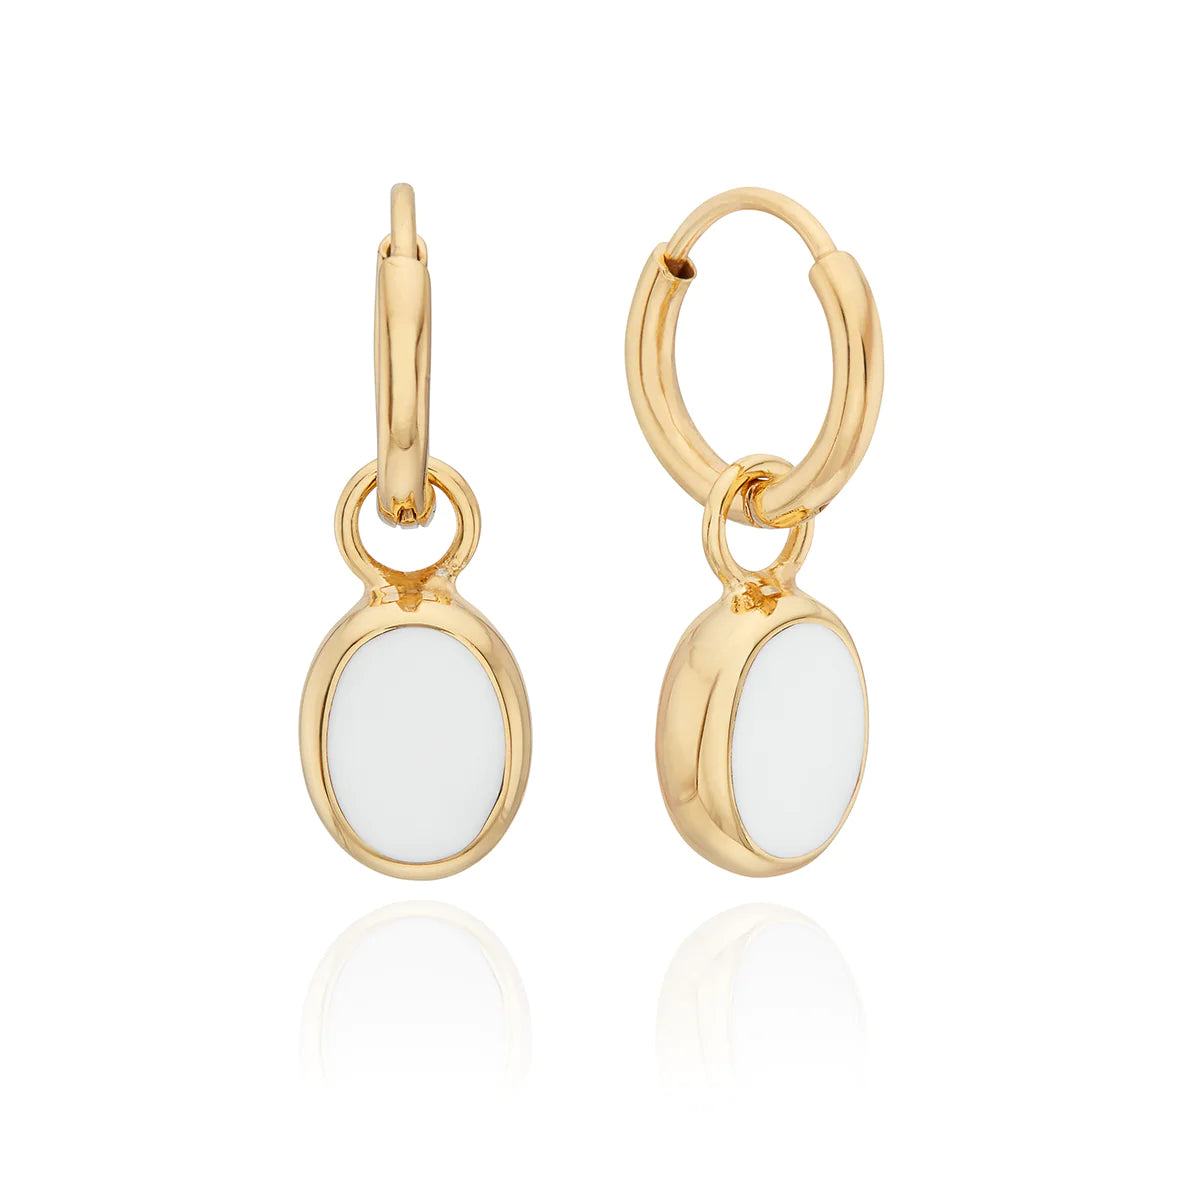 White agate and gold charm hoop earrings